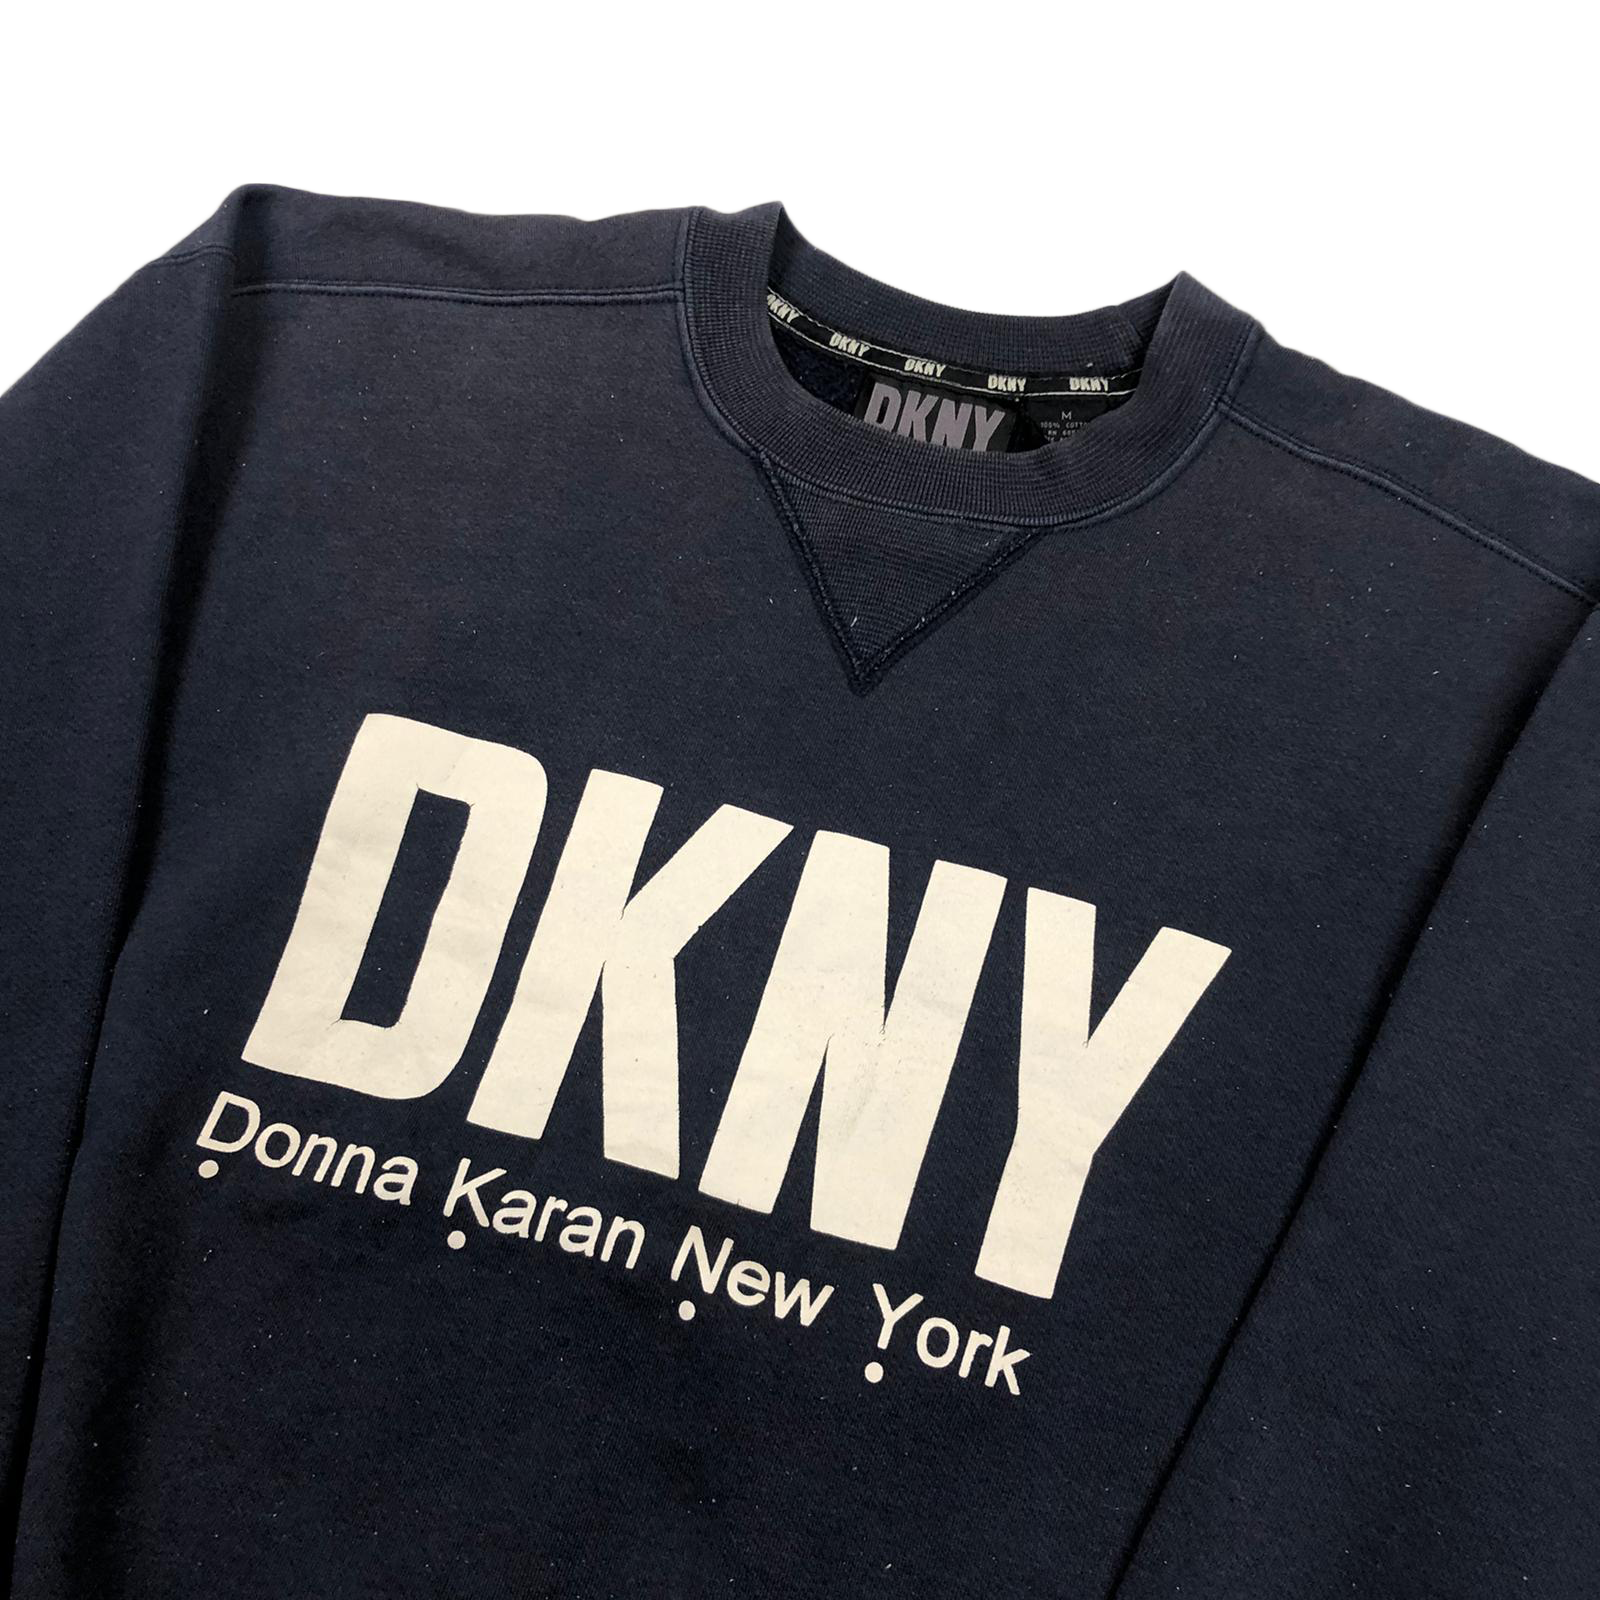 90's DKNY sweatshirt